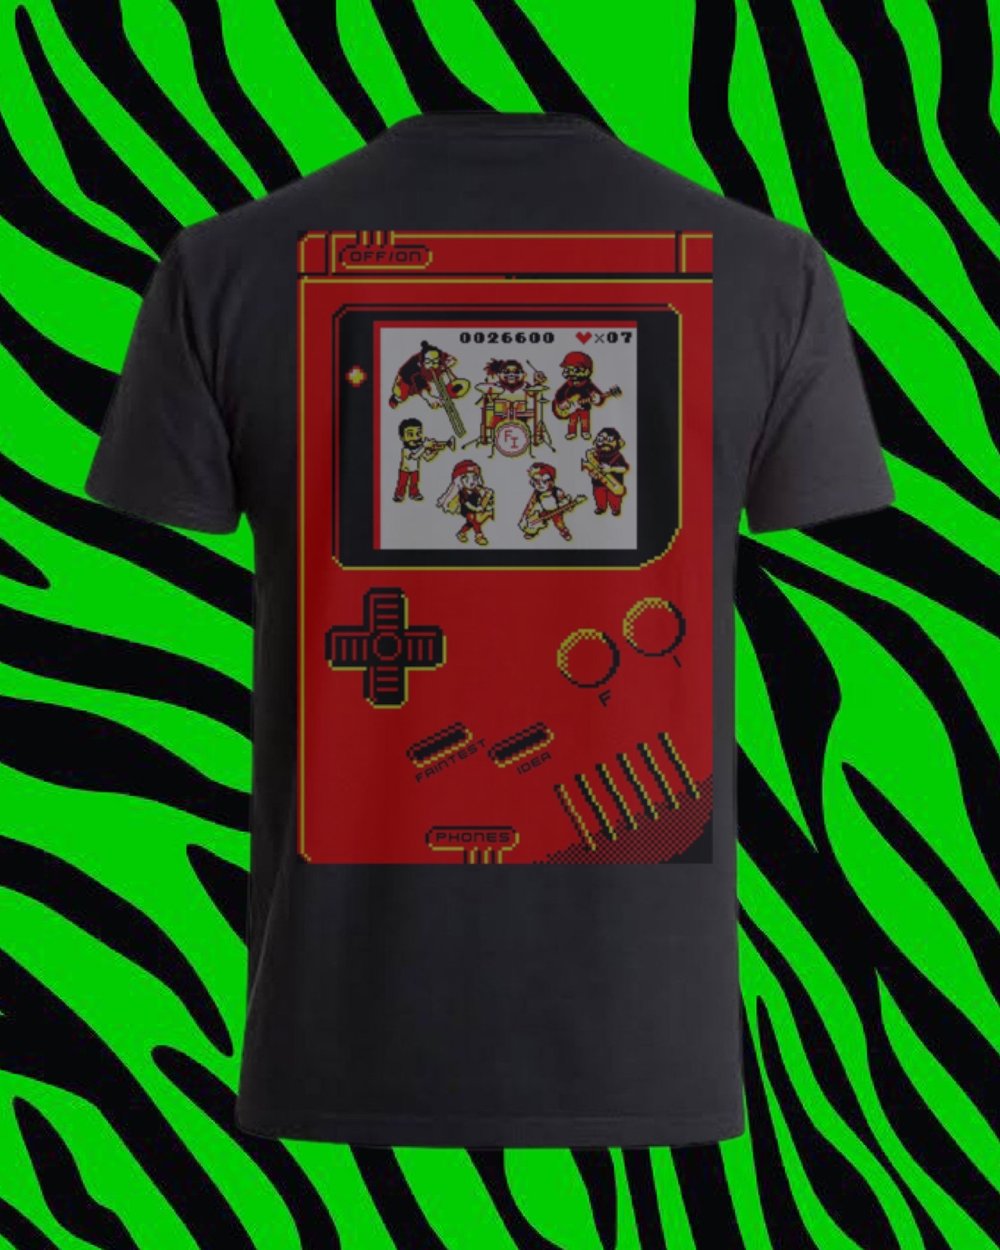 Retro Game Boy 8-bit Shirt